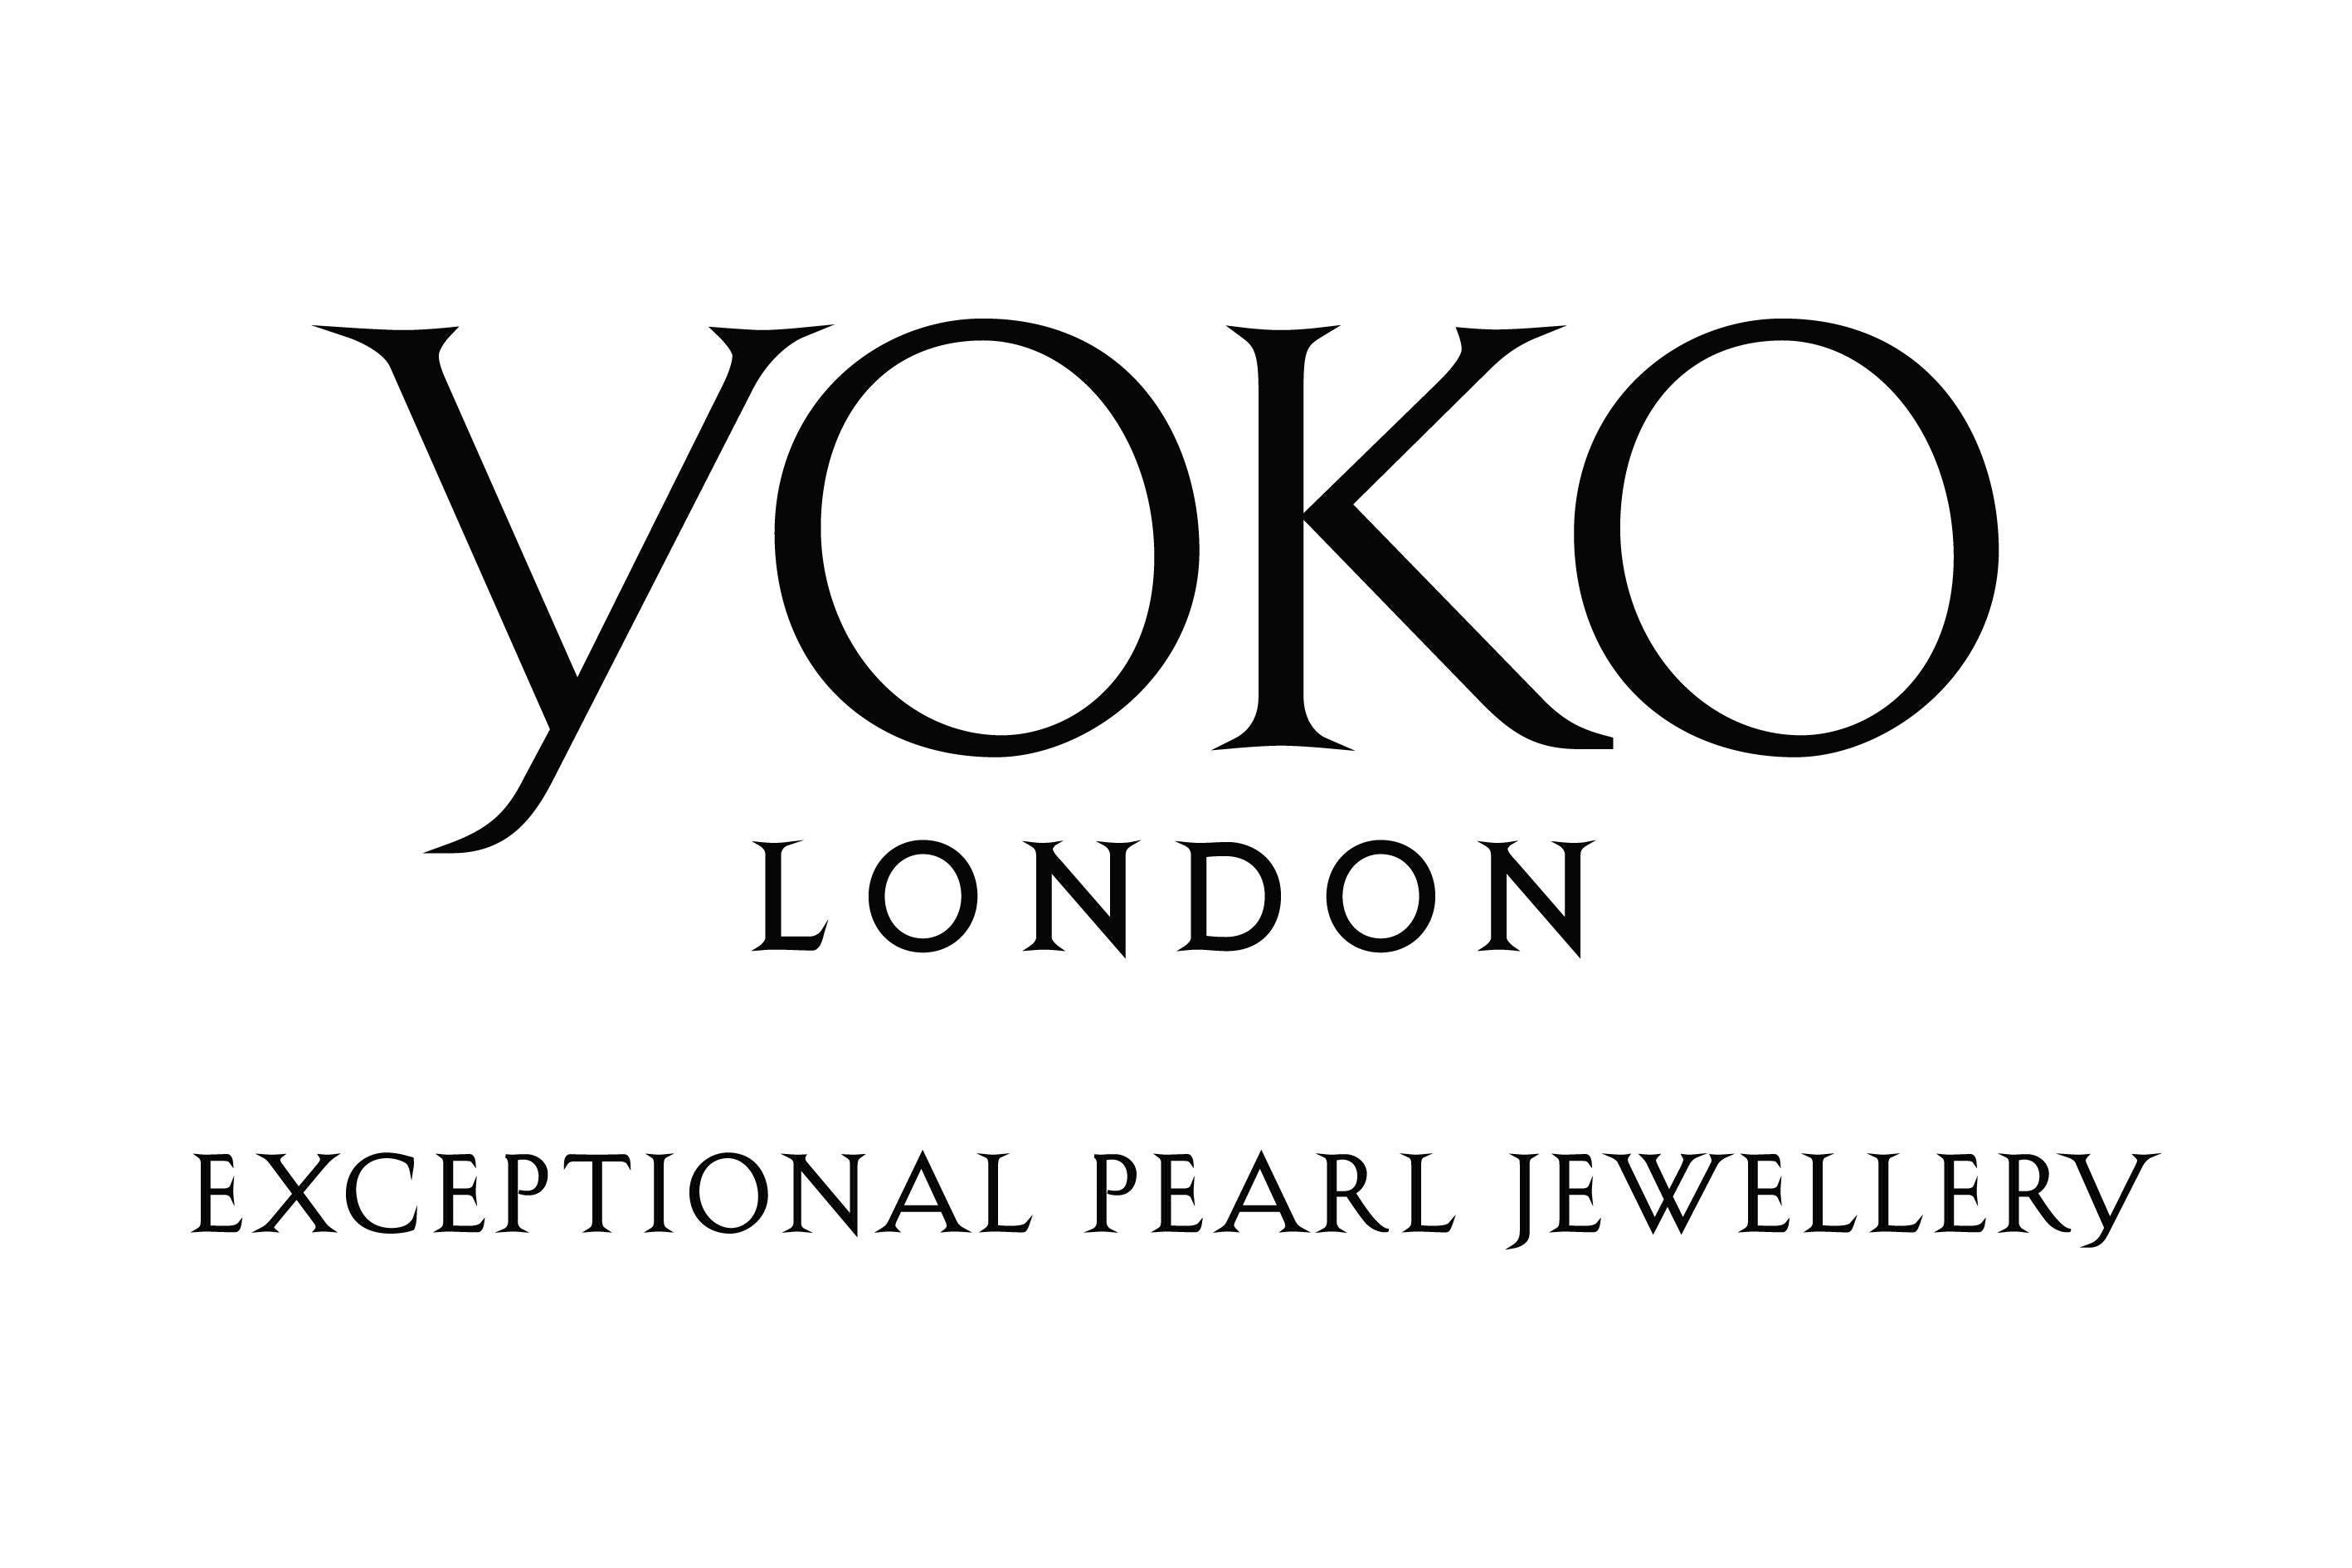 Yoko London Golden South Sea Pearl and Diamond Earrings in 18 Karat Yellow Gold 2